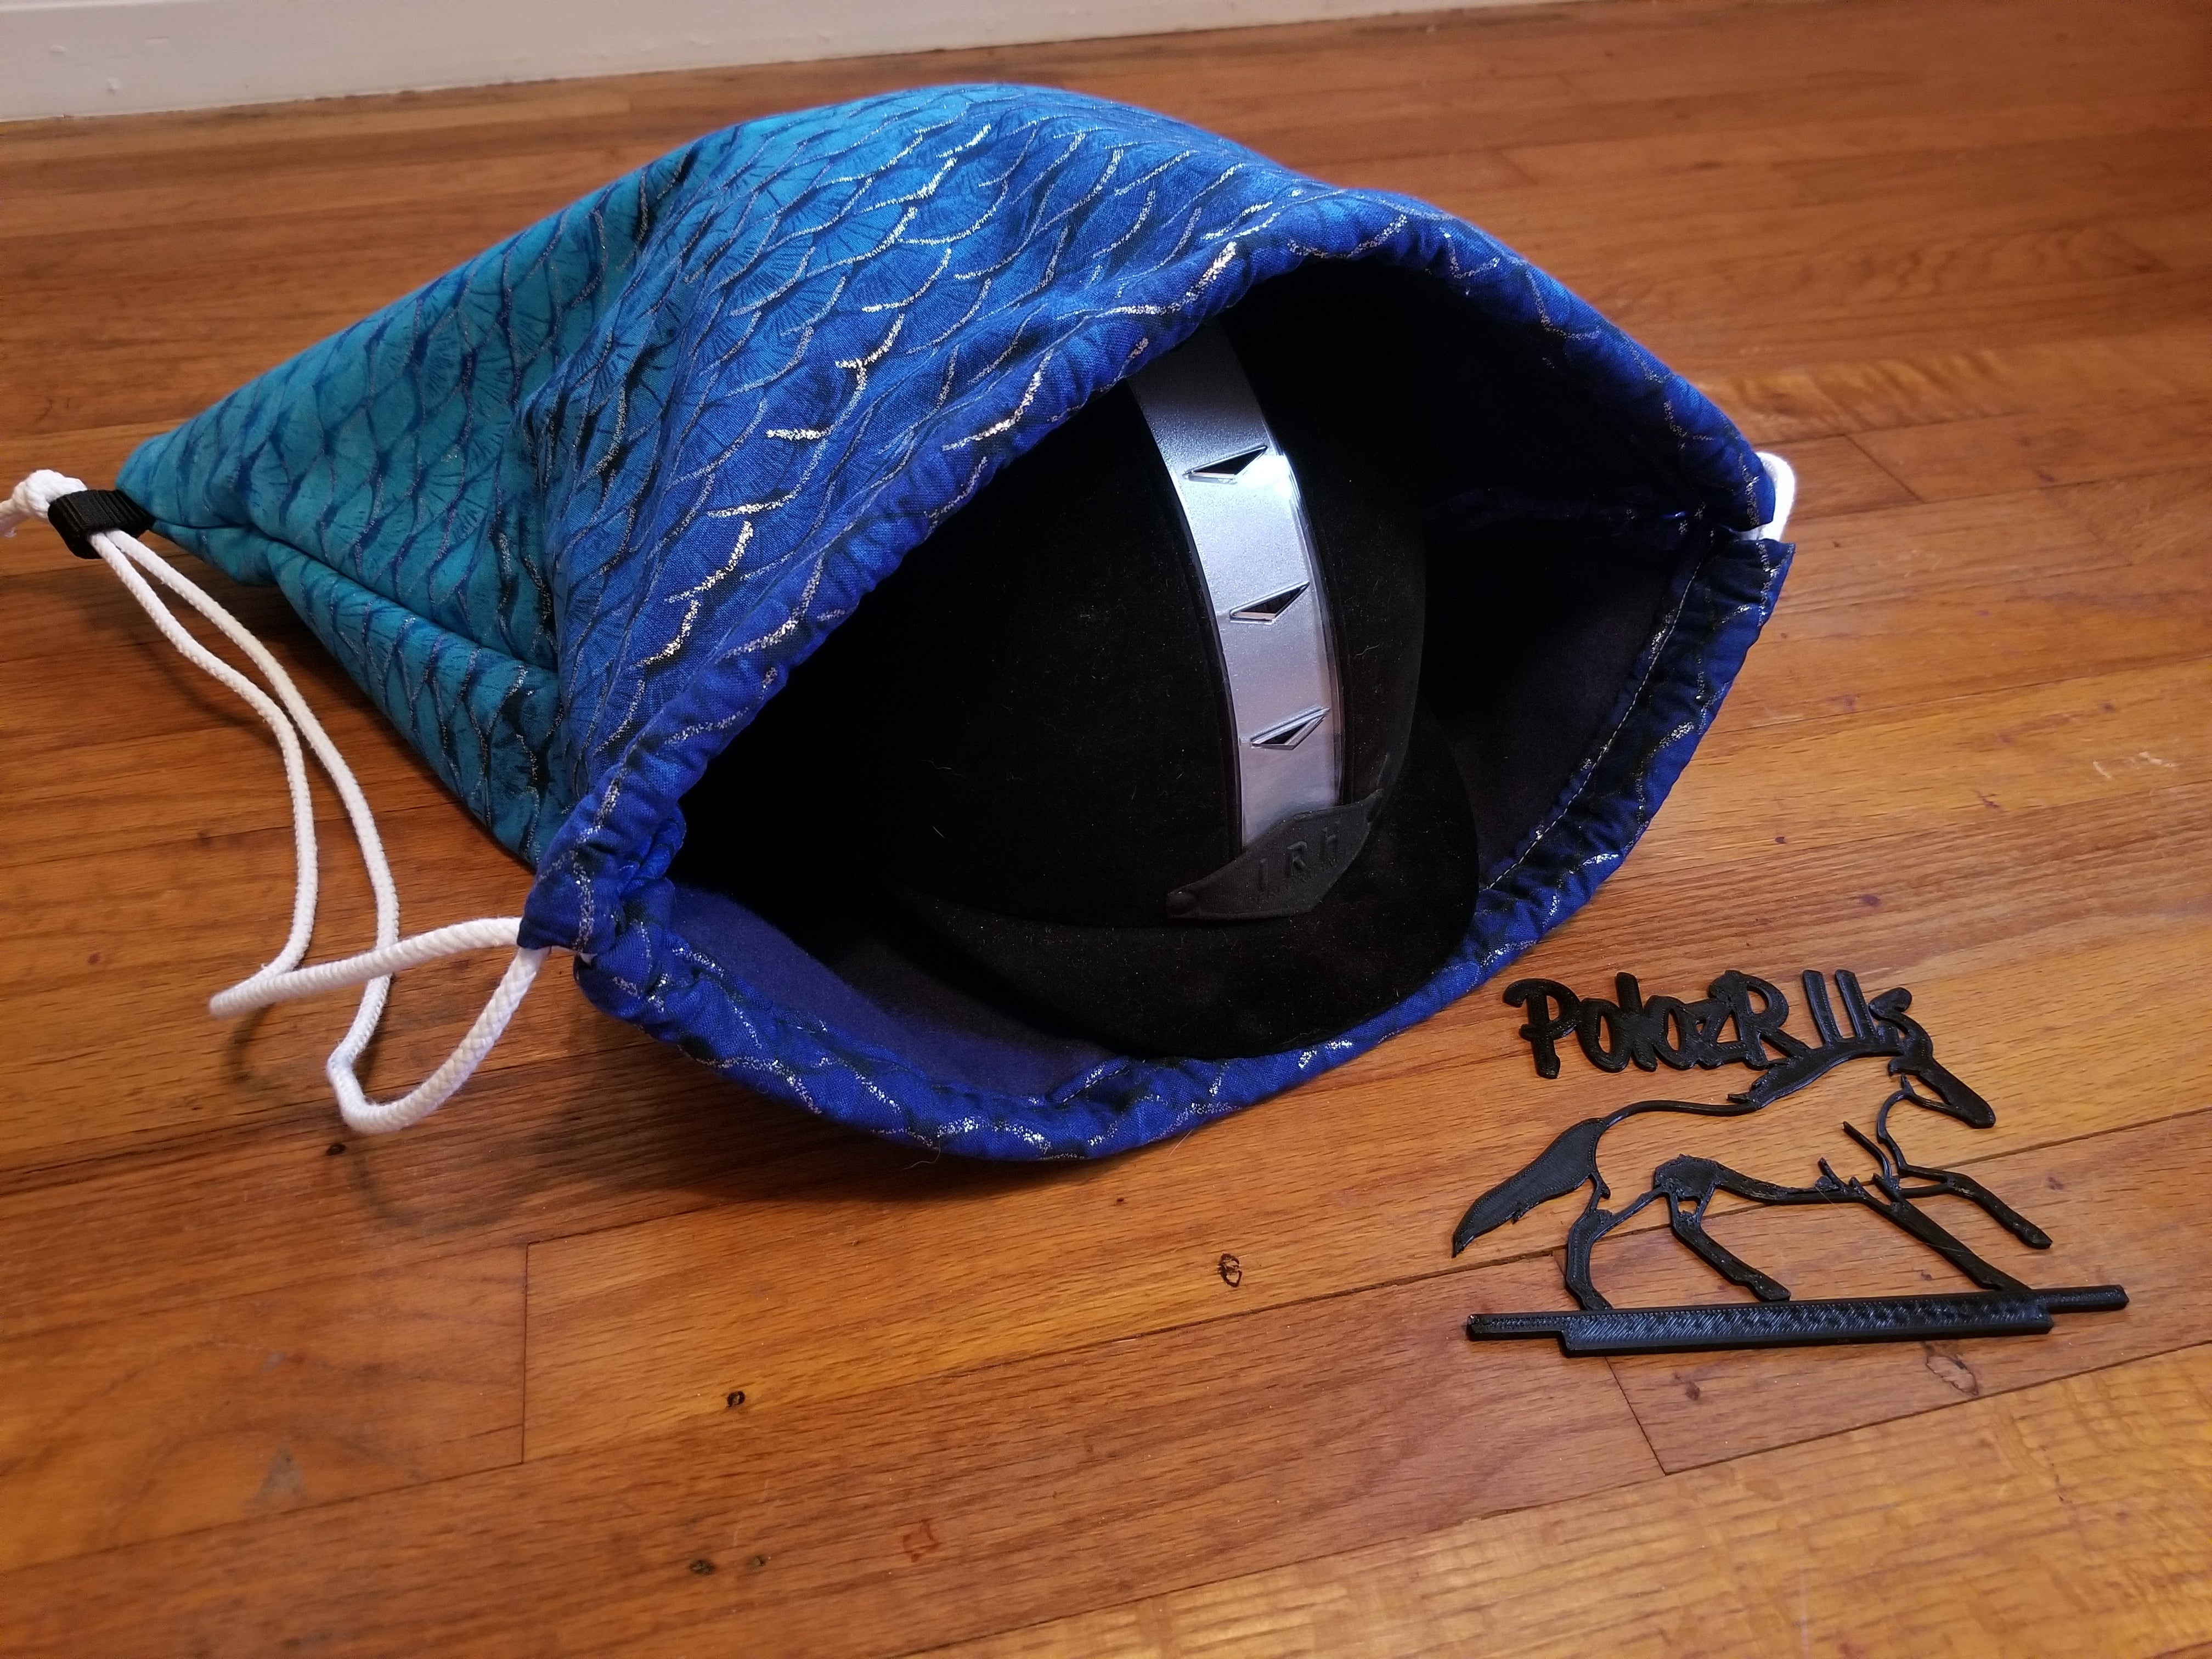 Turquoise & Royal Blue Ombre Mermaid Scales Fleece Lined Helmet Bag